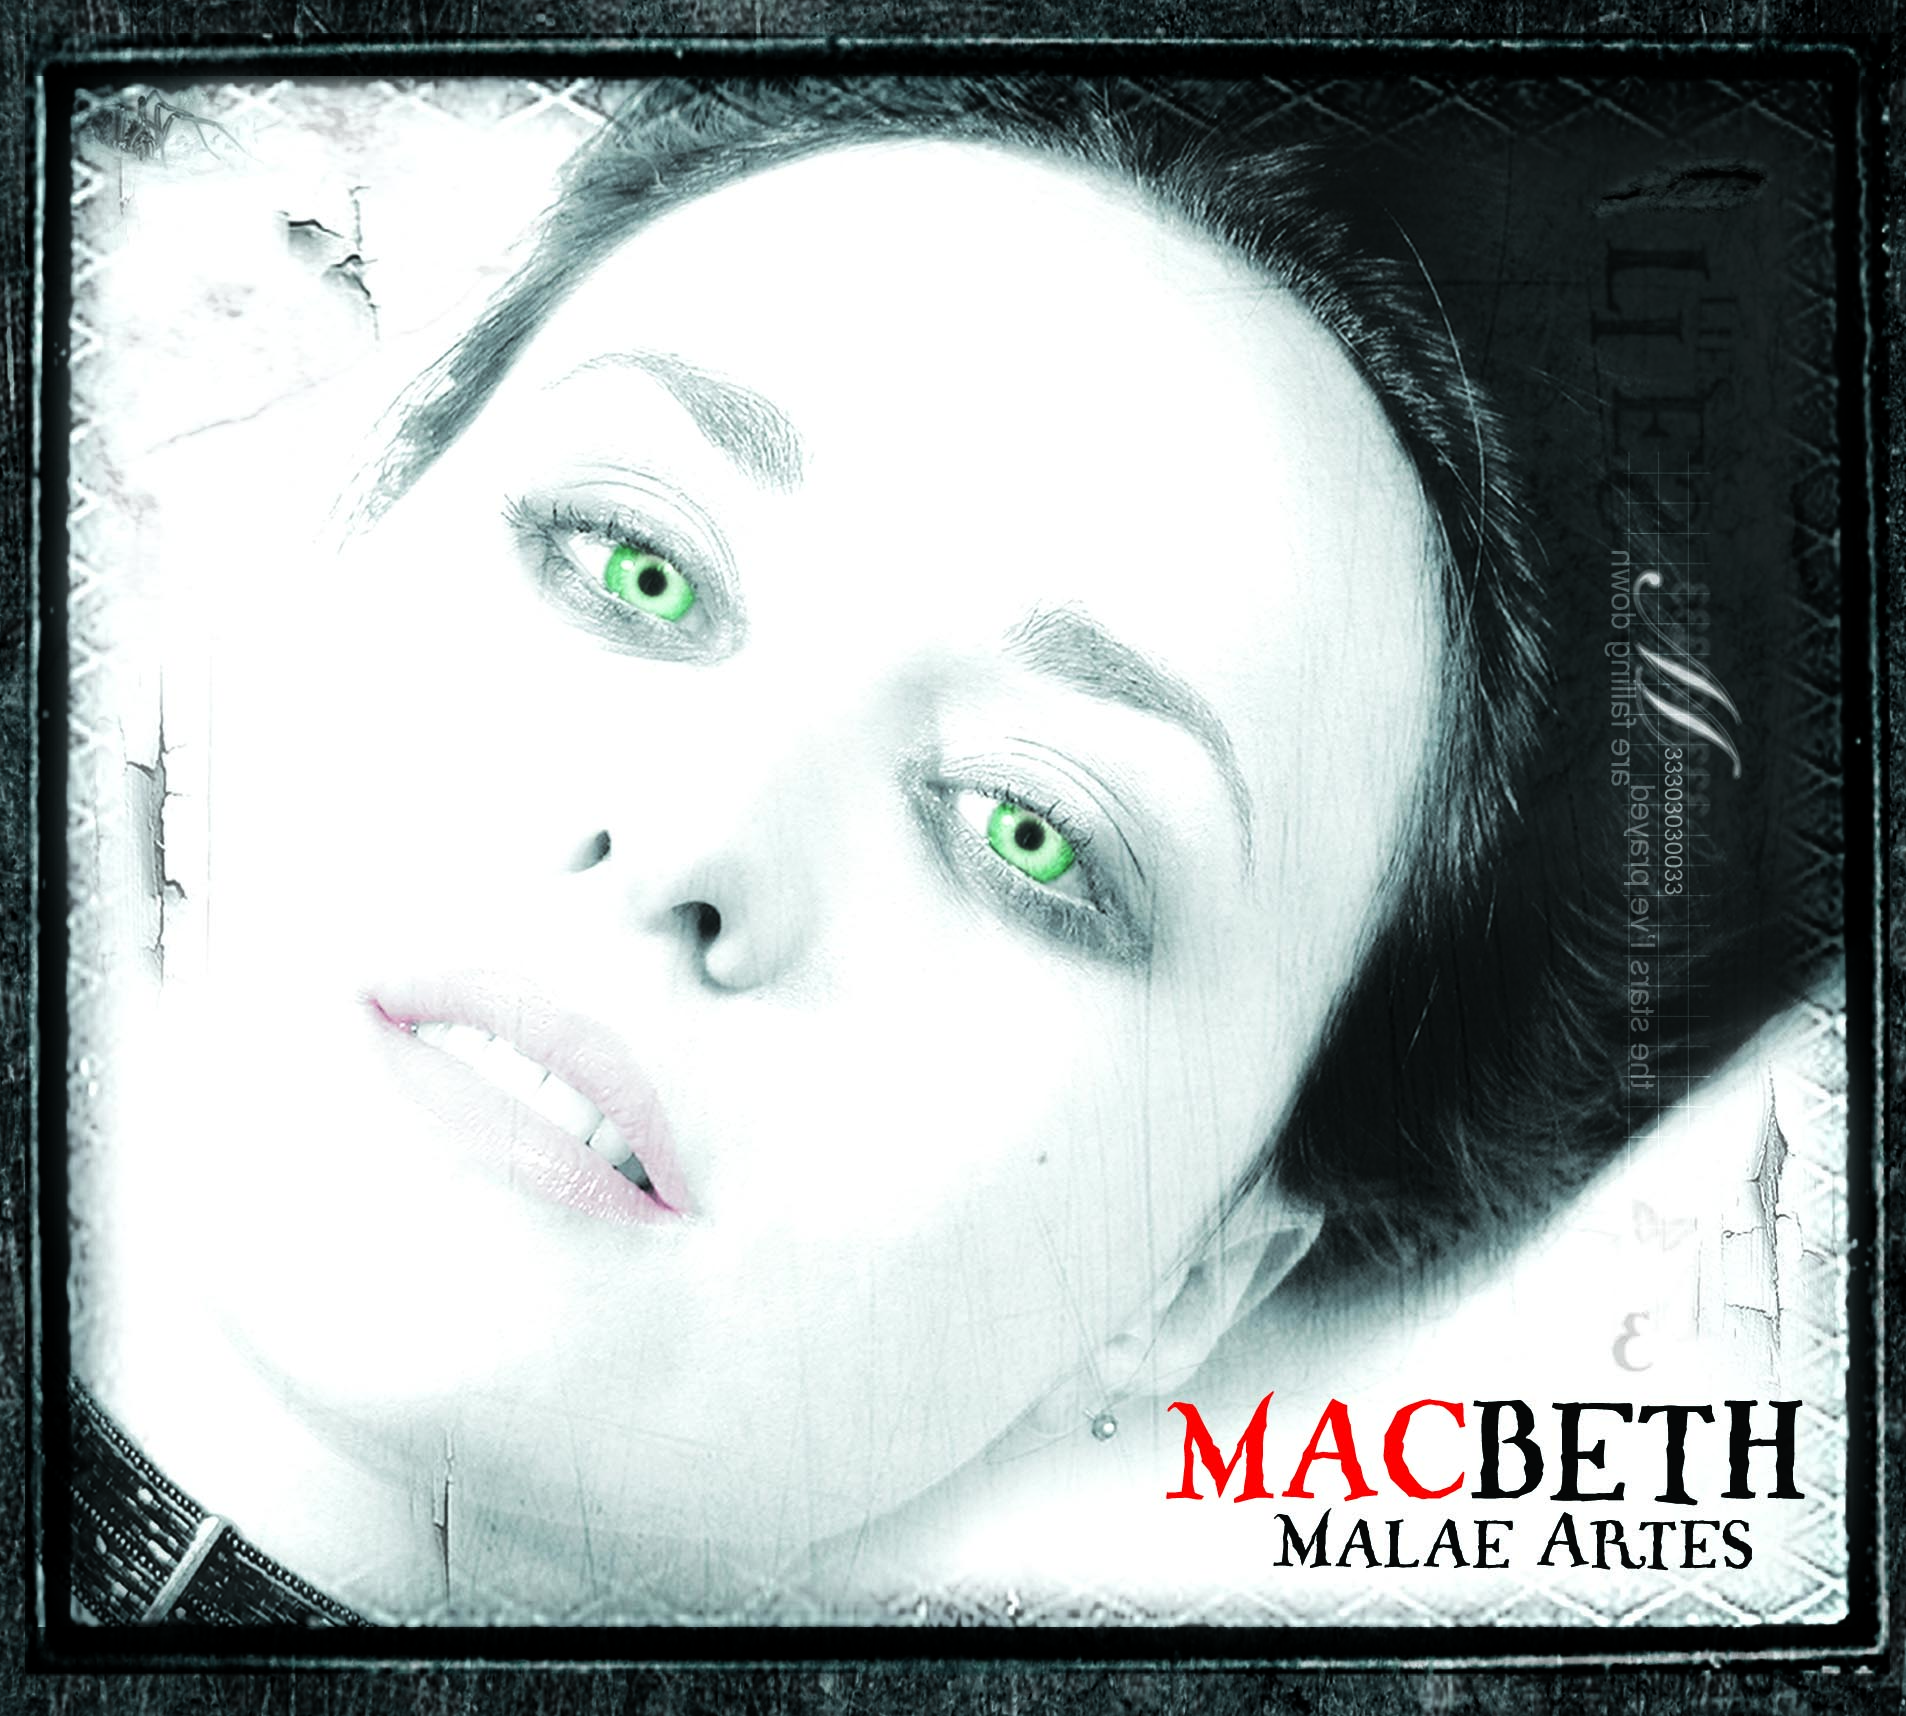 Macbeth: Malae Artes (2005) Book Cover